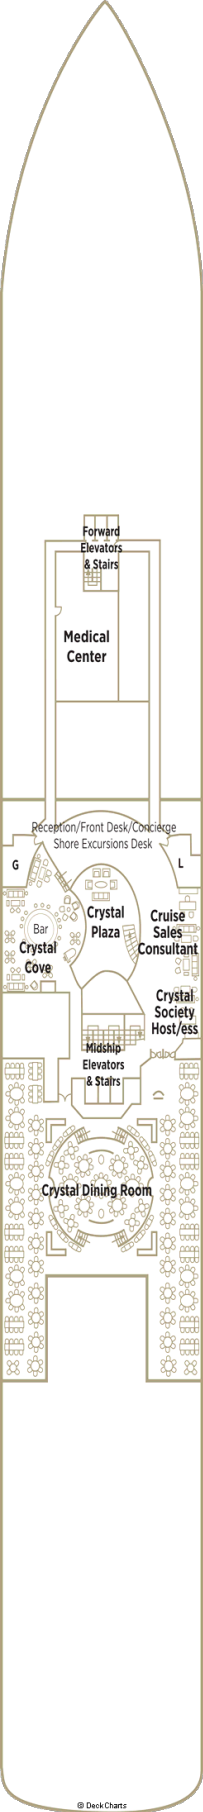 Crystal Serenity Cruises Deck Image